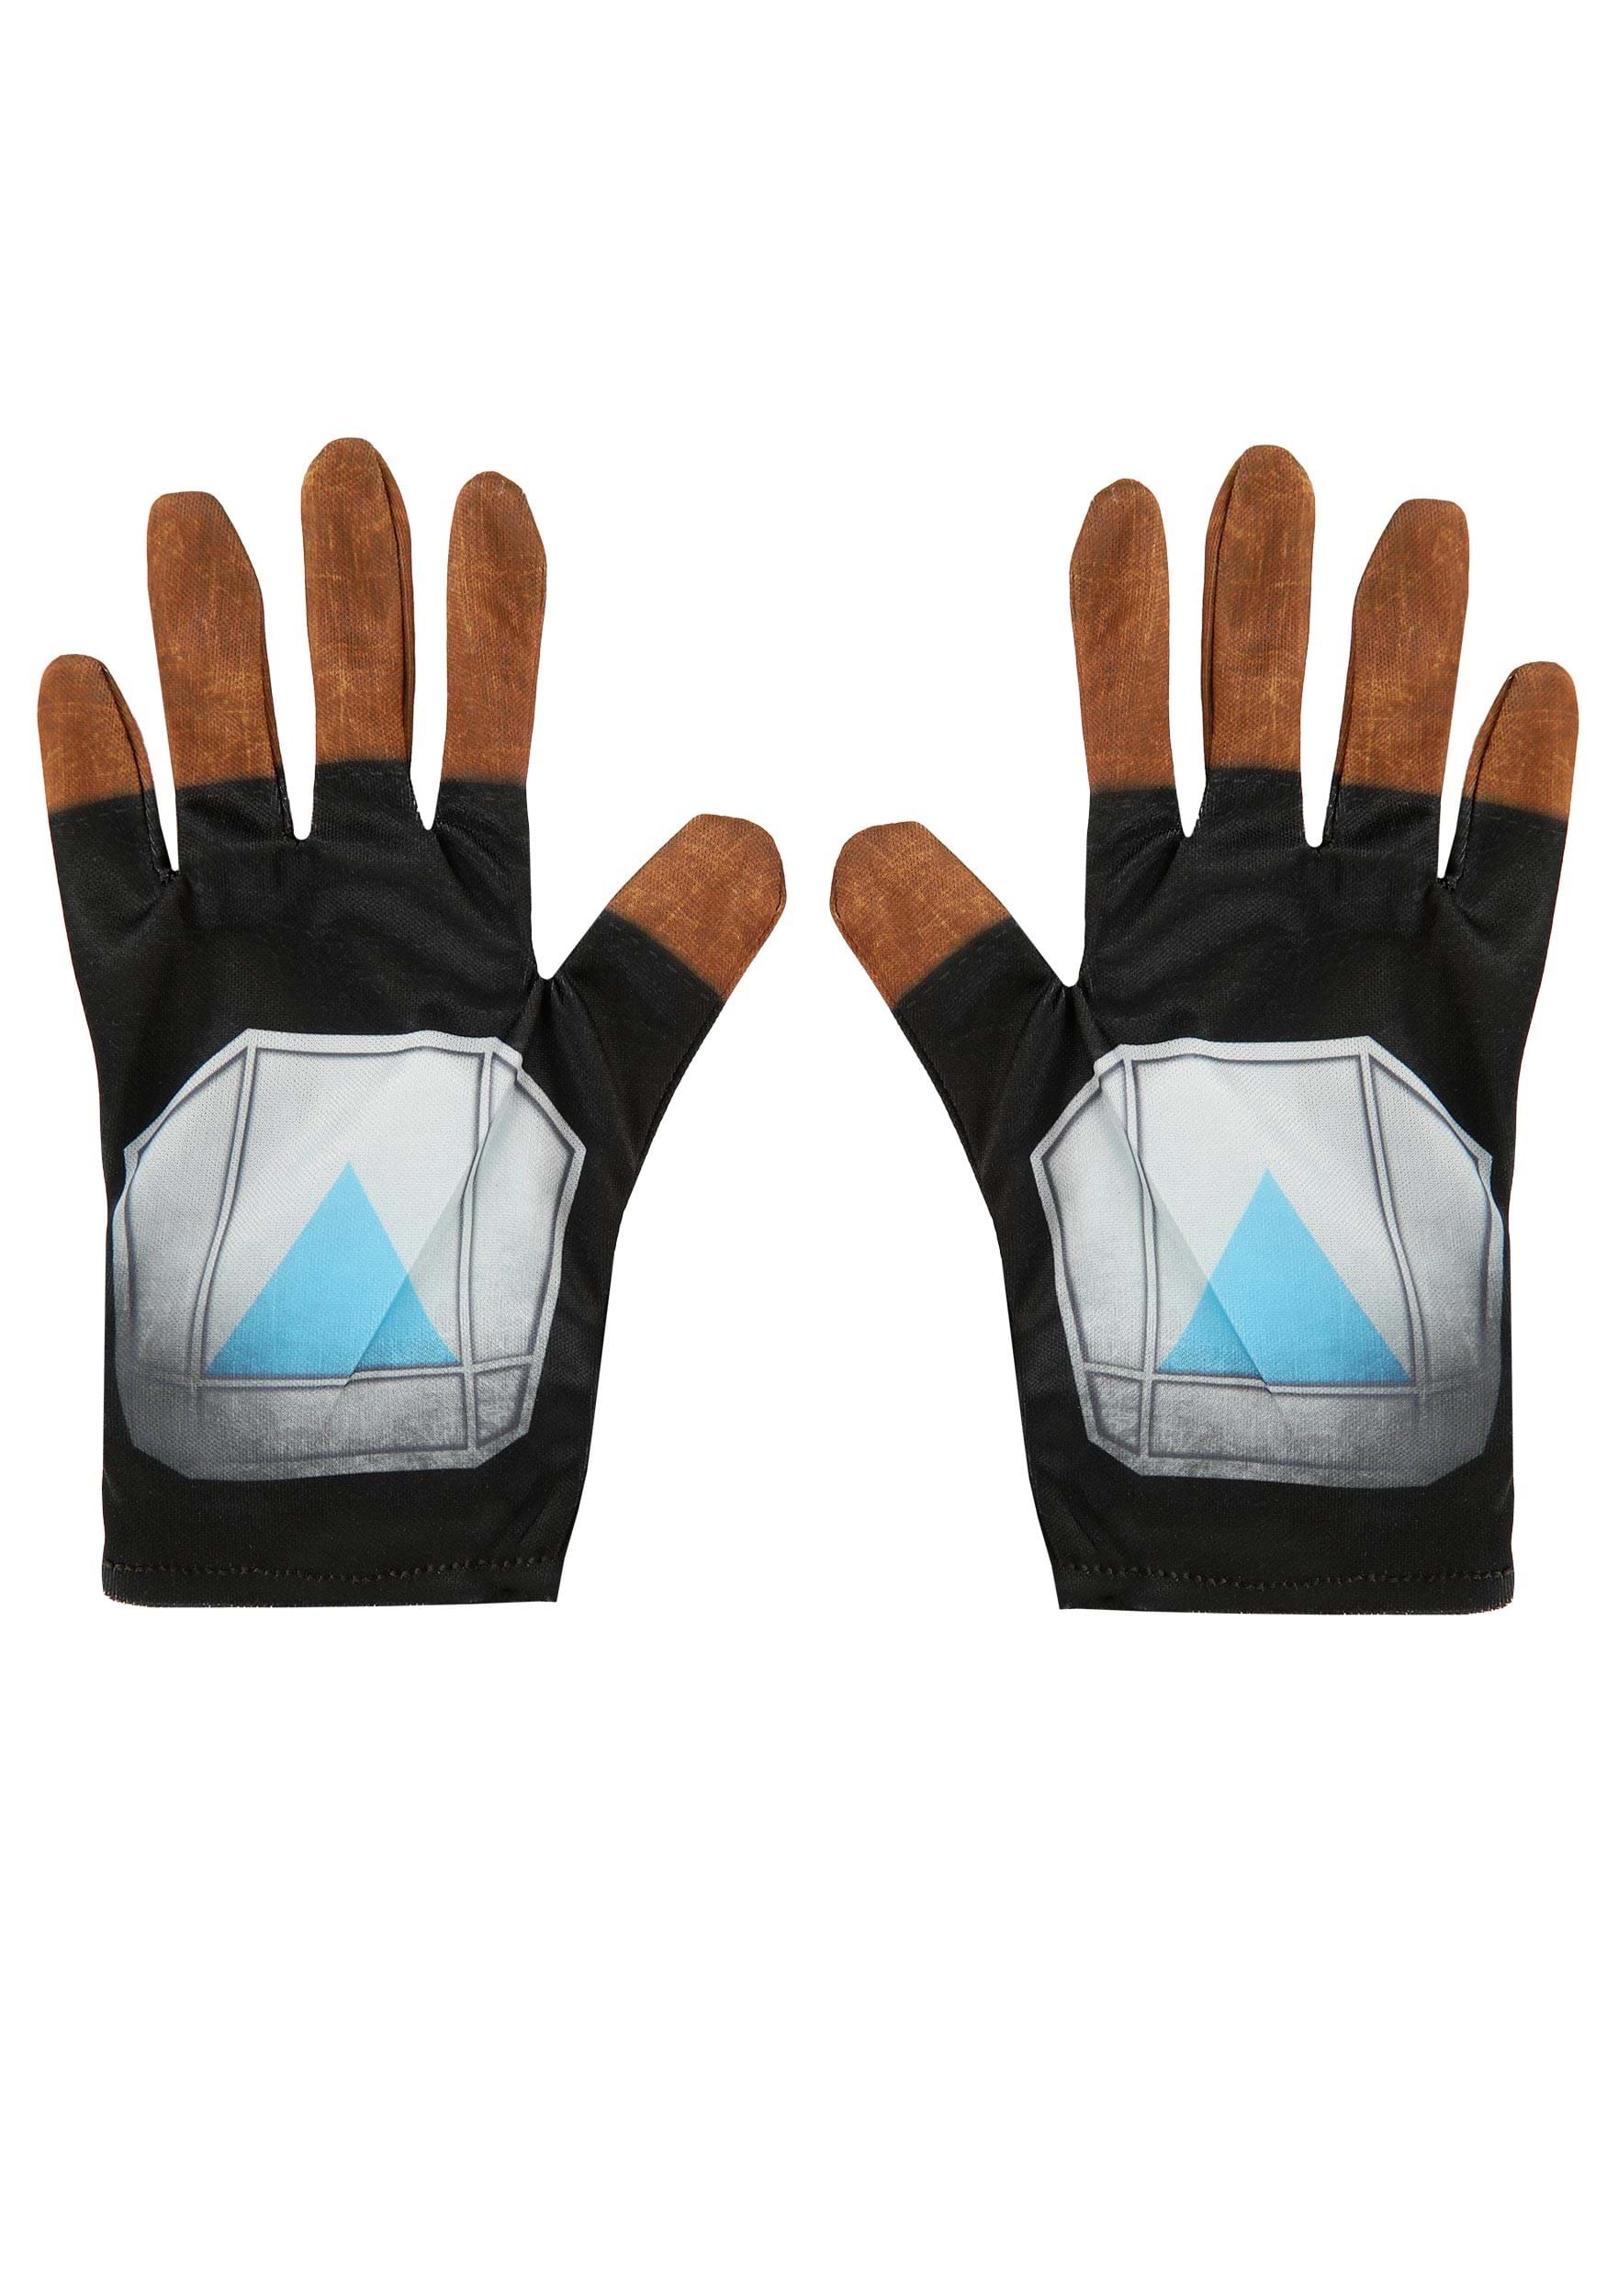 The Mandalorian Kids Gloves